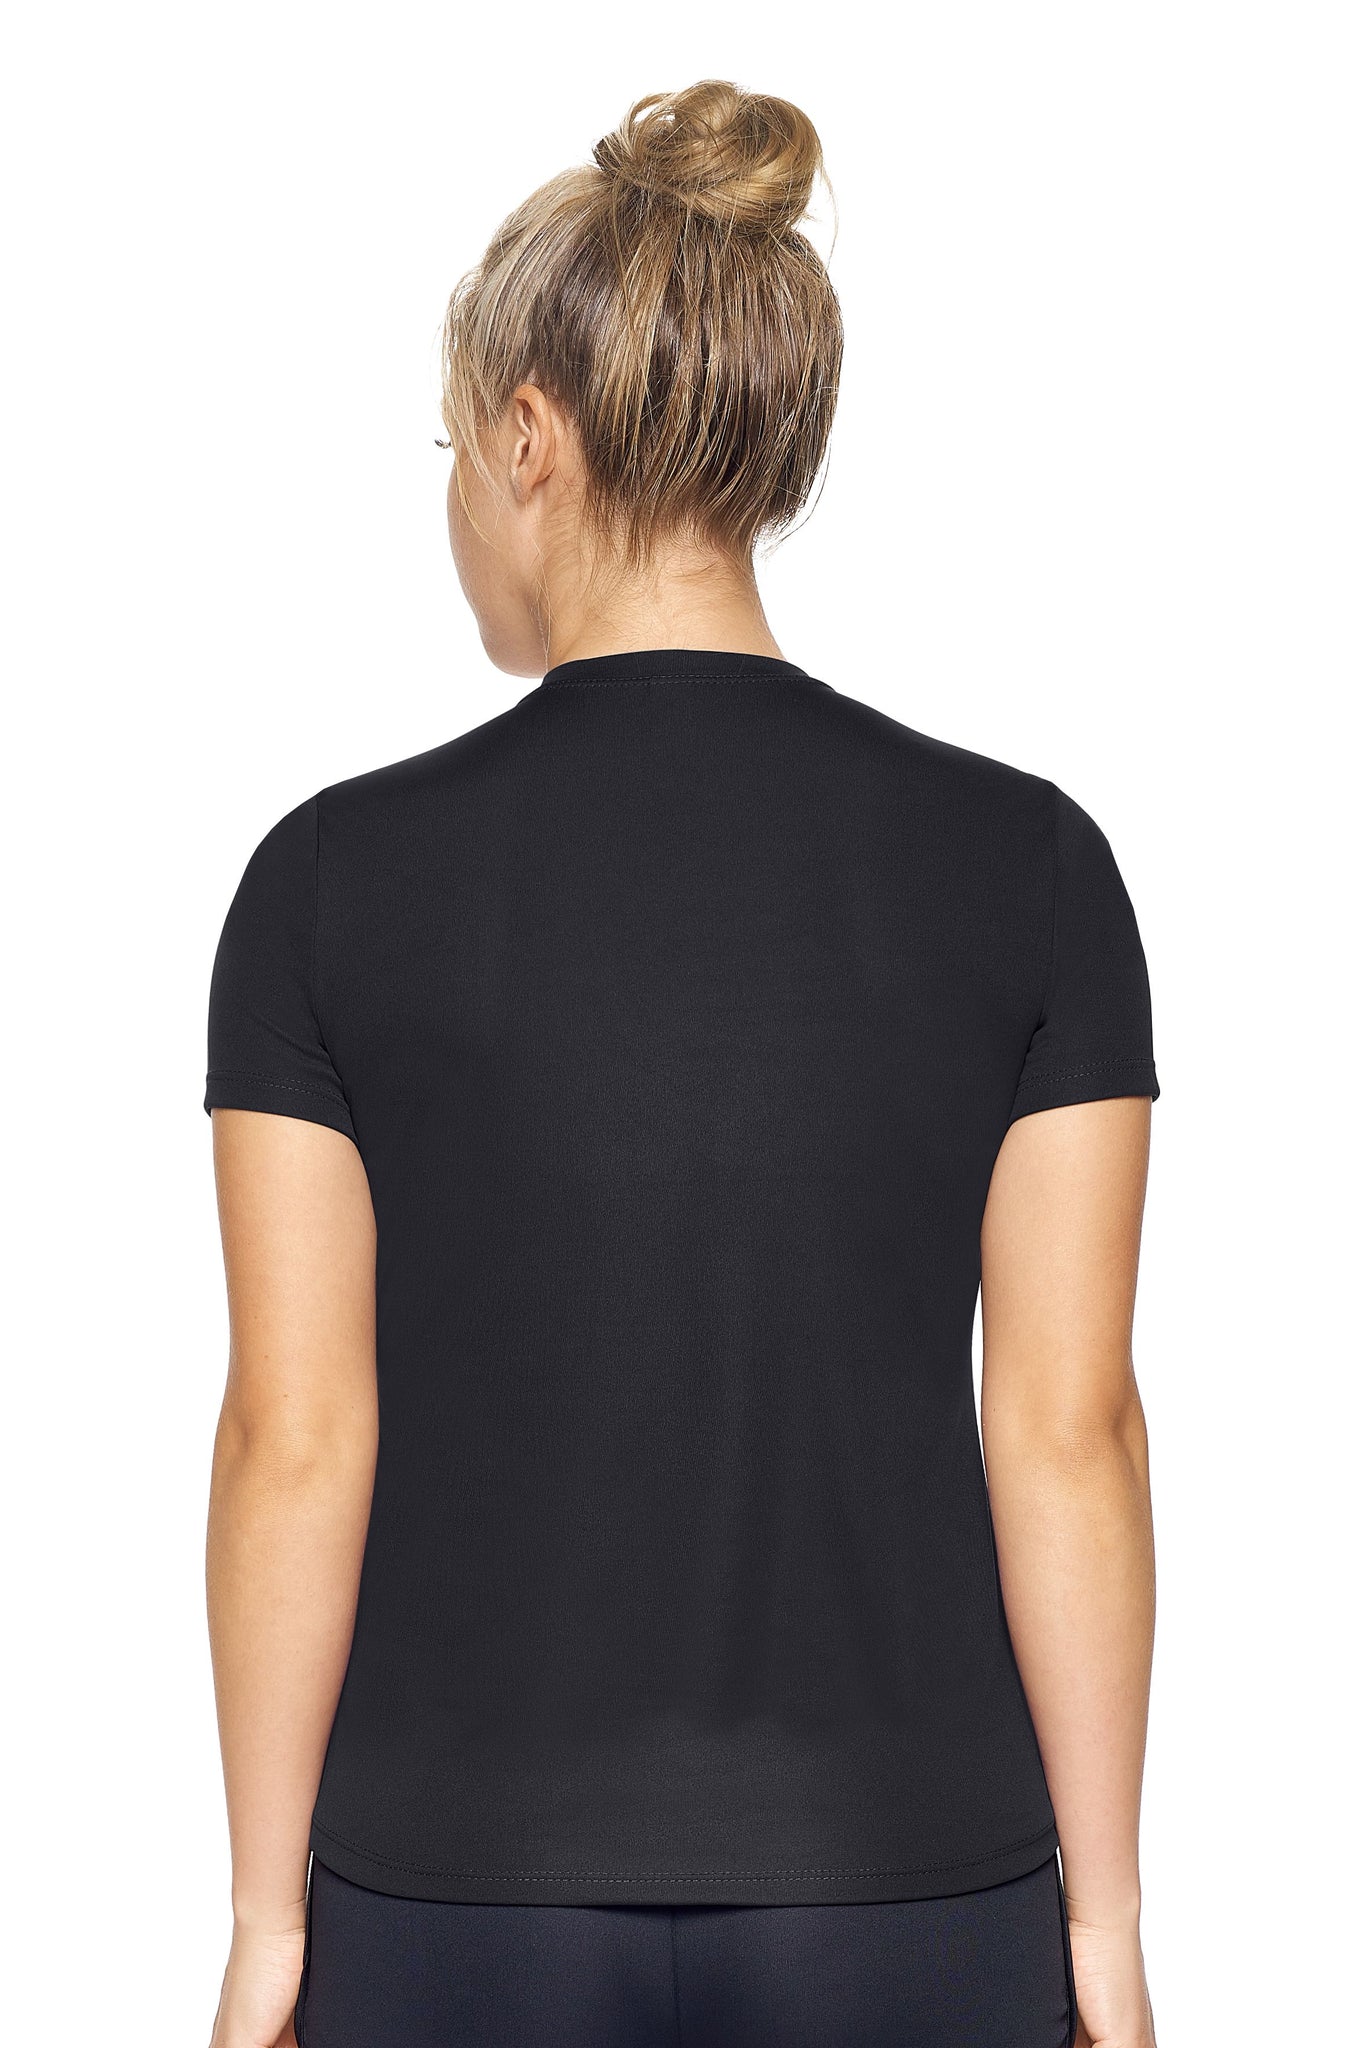 Expert Brand Women's Black pk MaX™ Short Sleeve Expert Tee Image 3#black